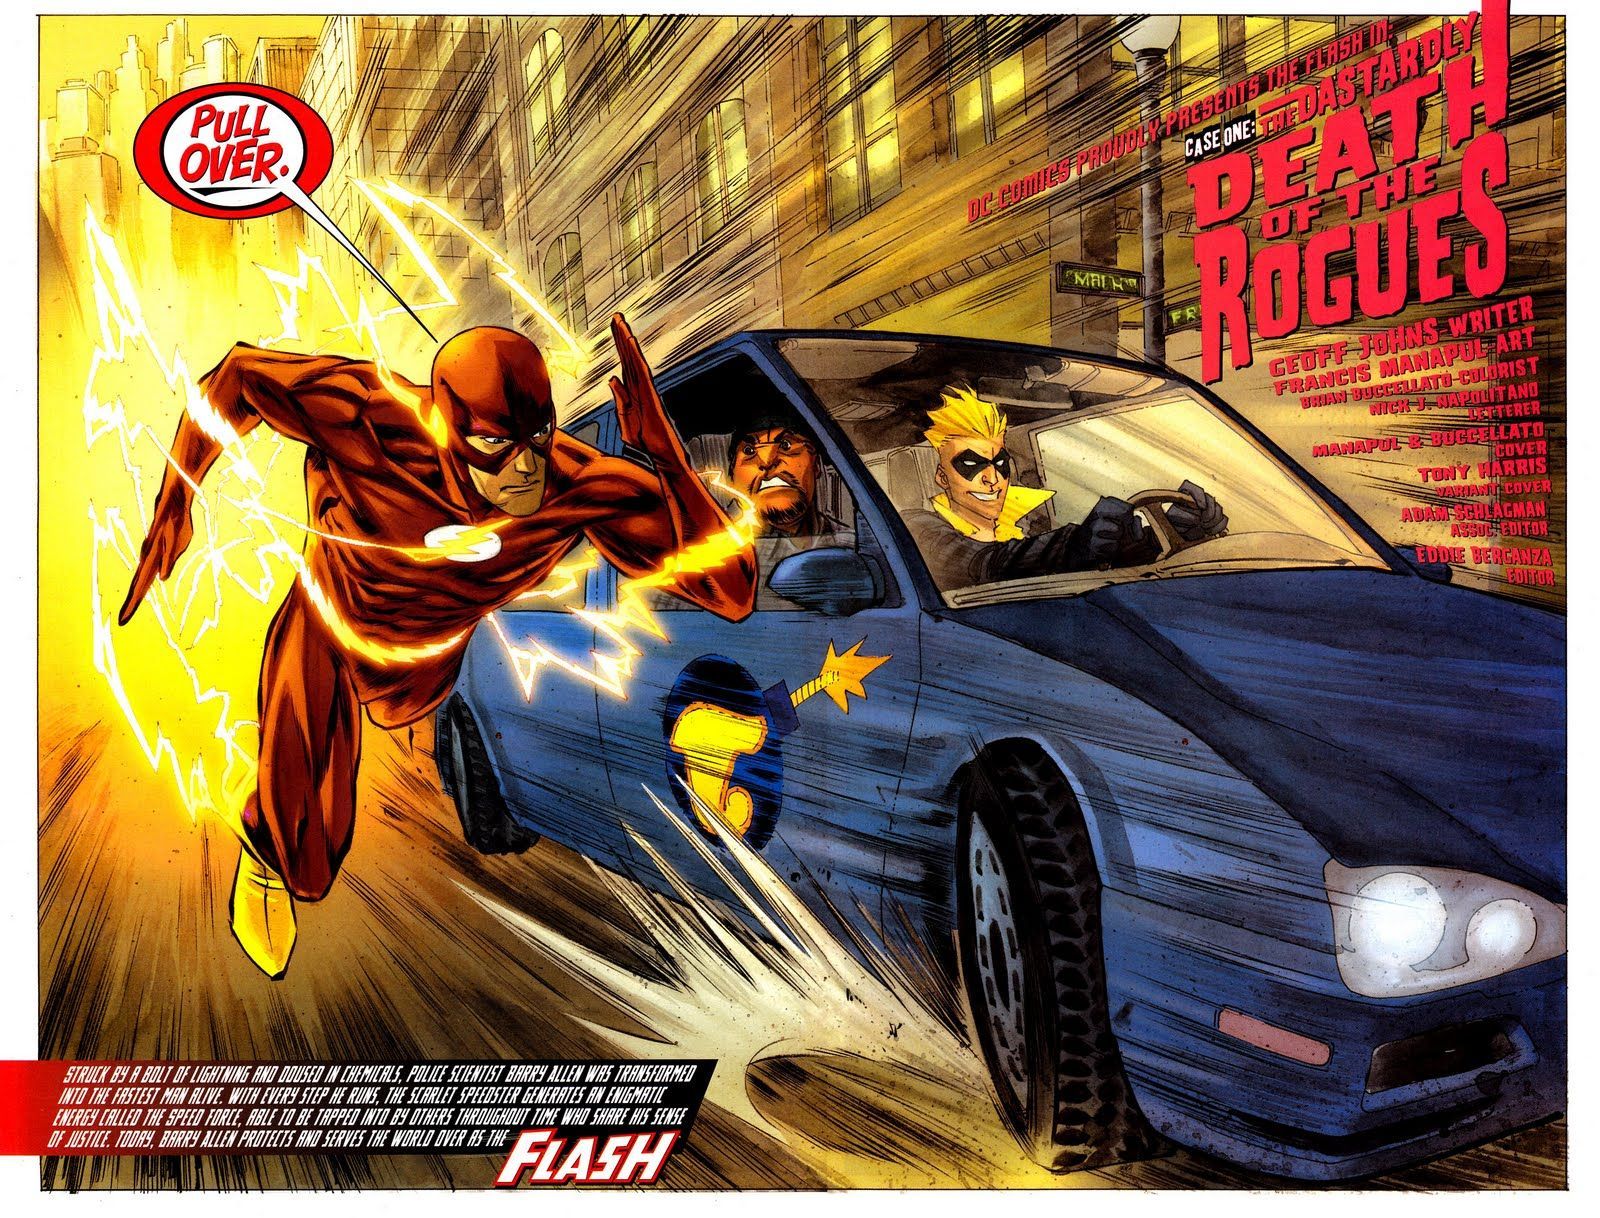 Ghost Rider Flash